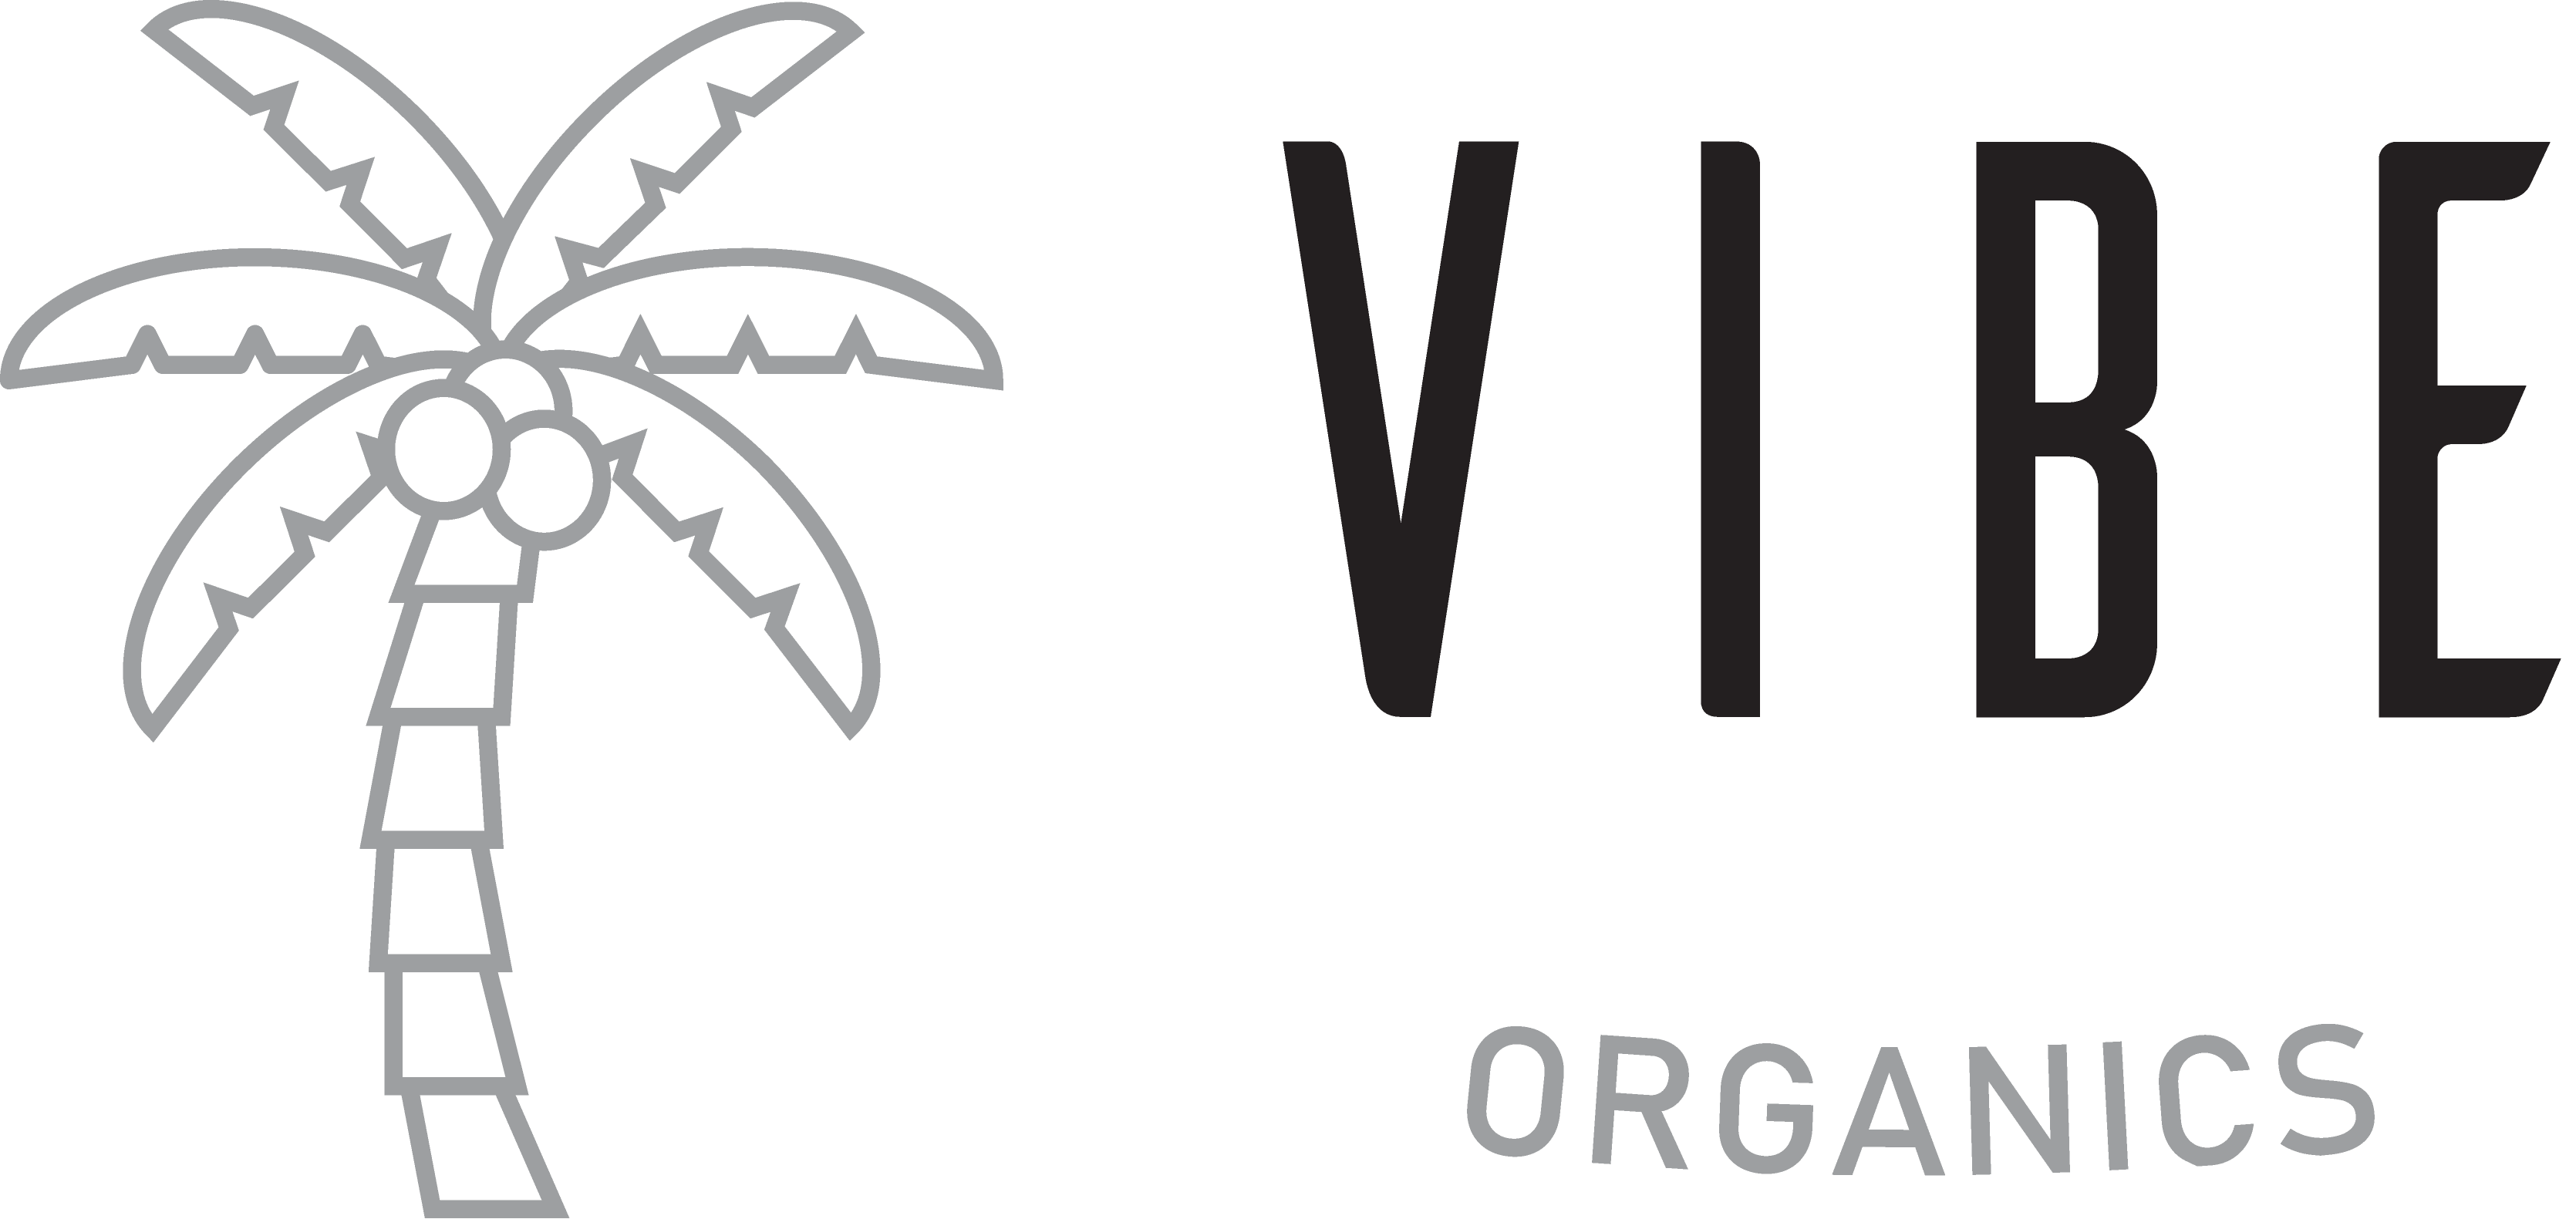 www.vibeorganics.health